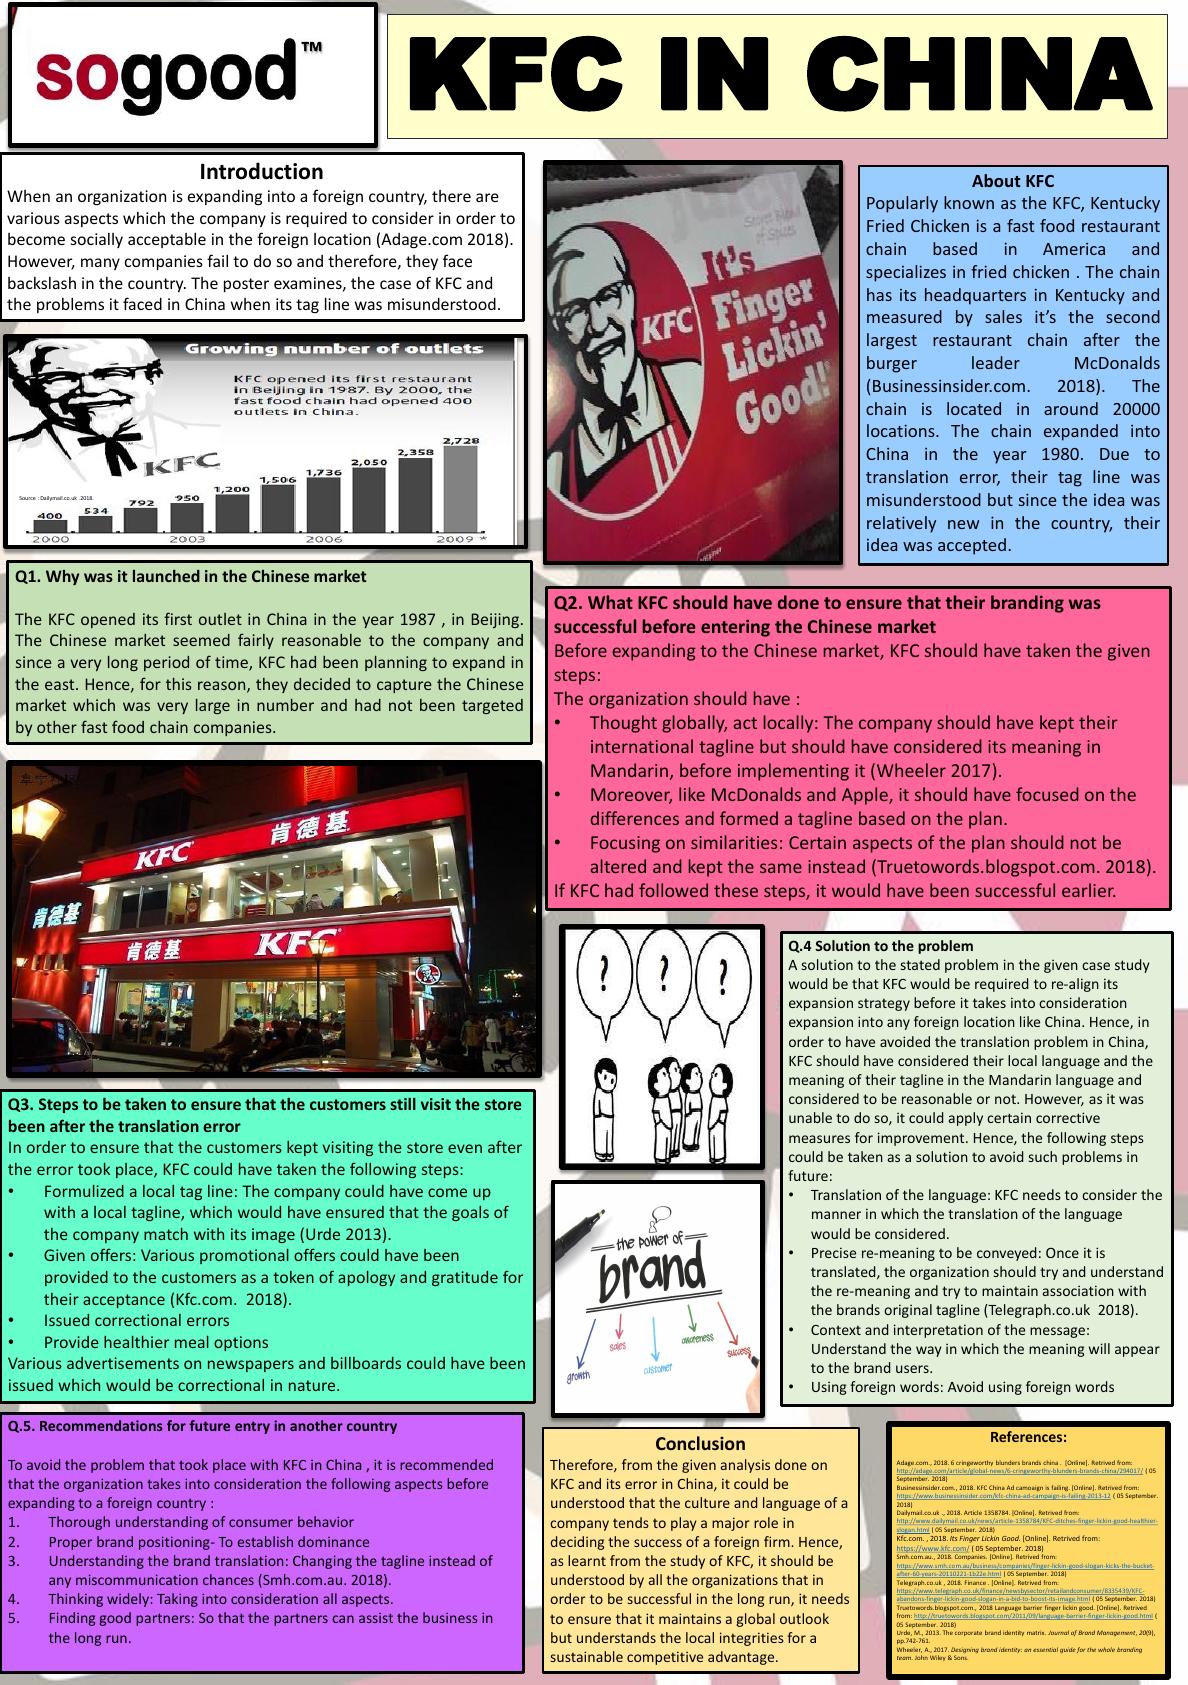 KFC's Branding Error in China: Lessons Learned_1